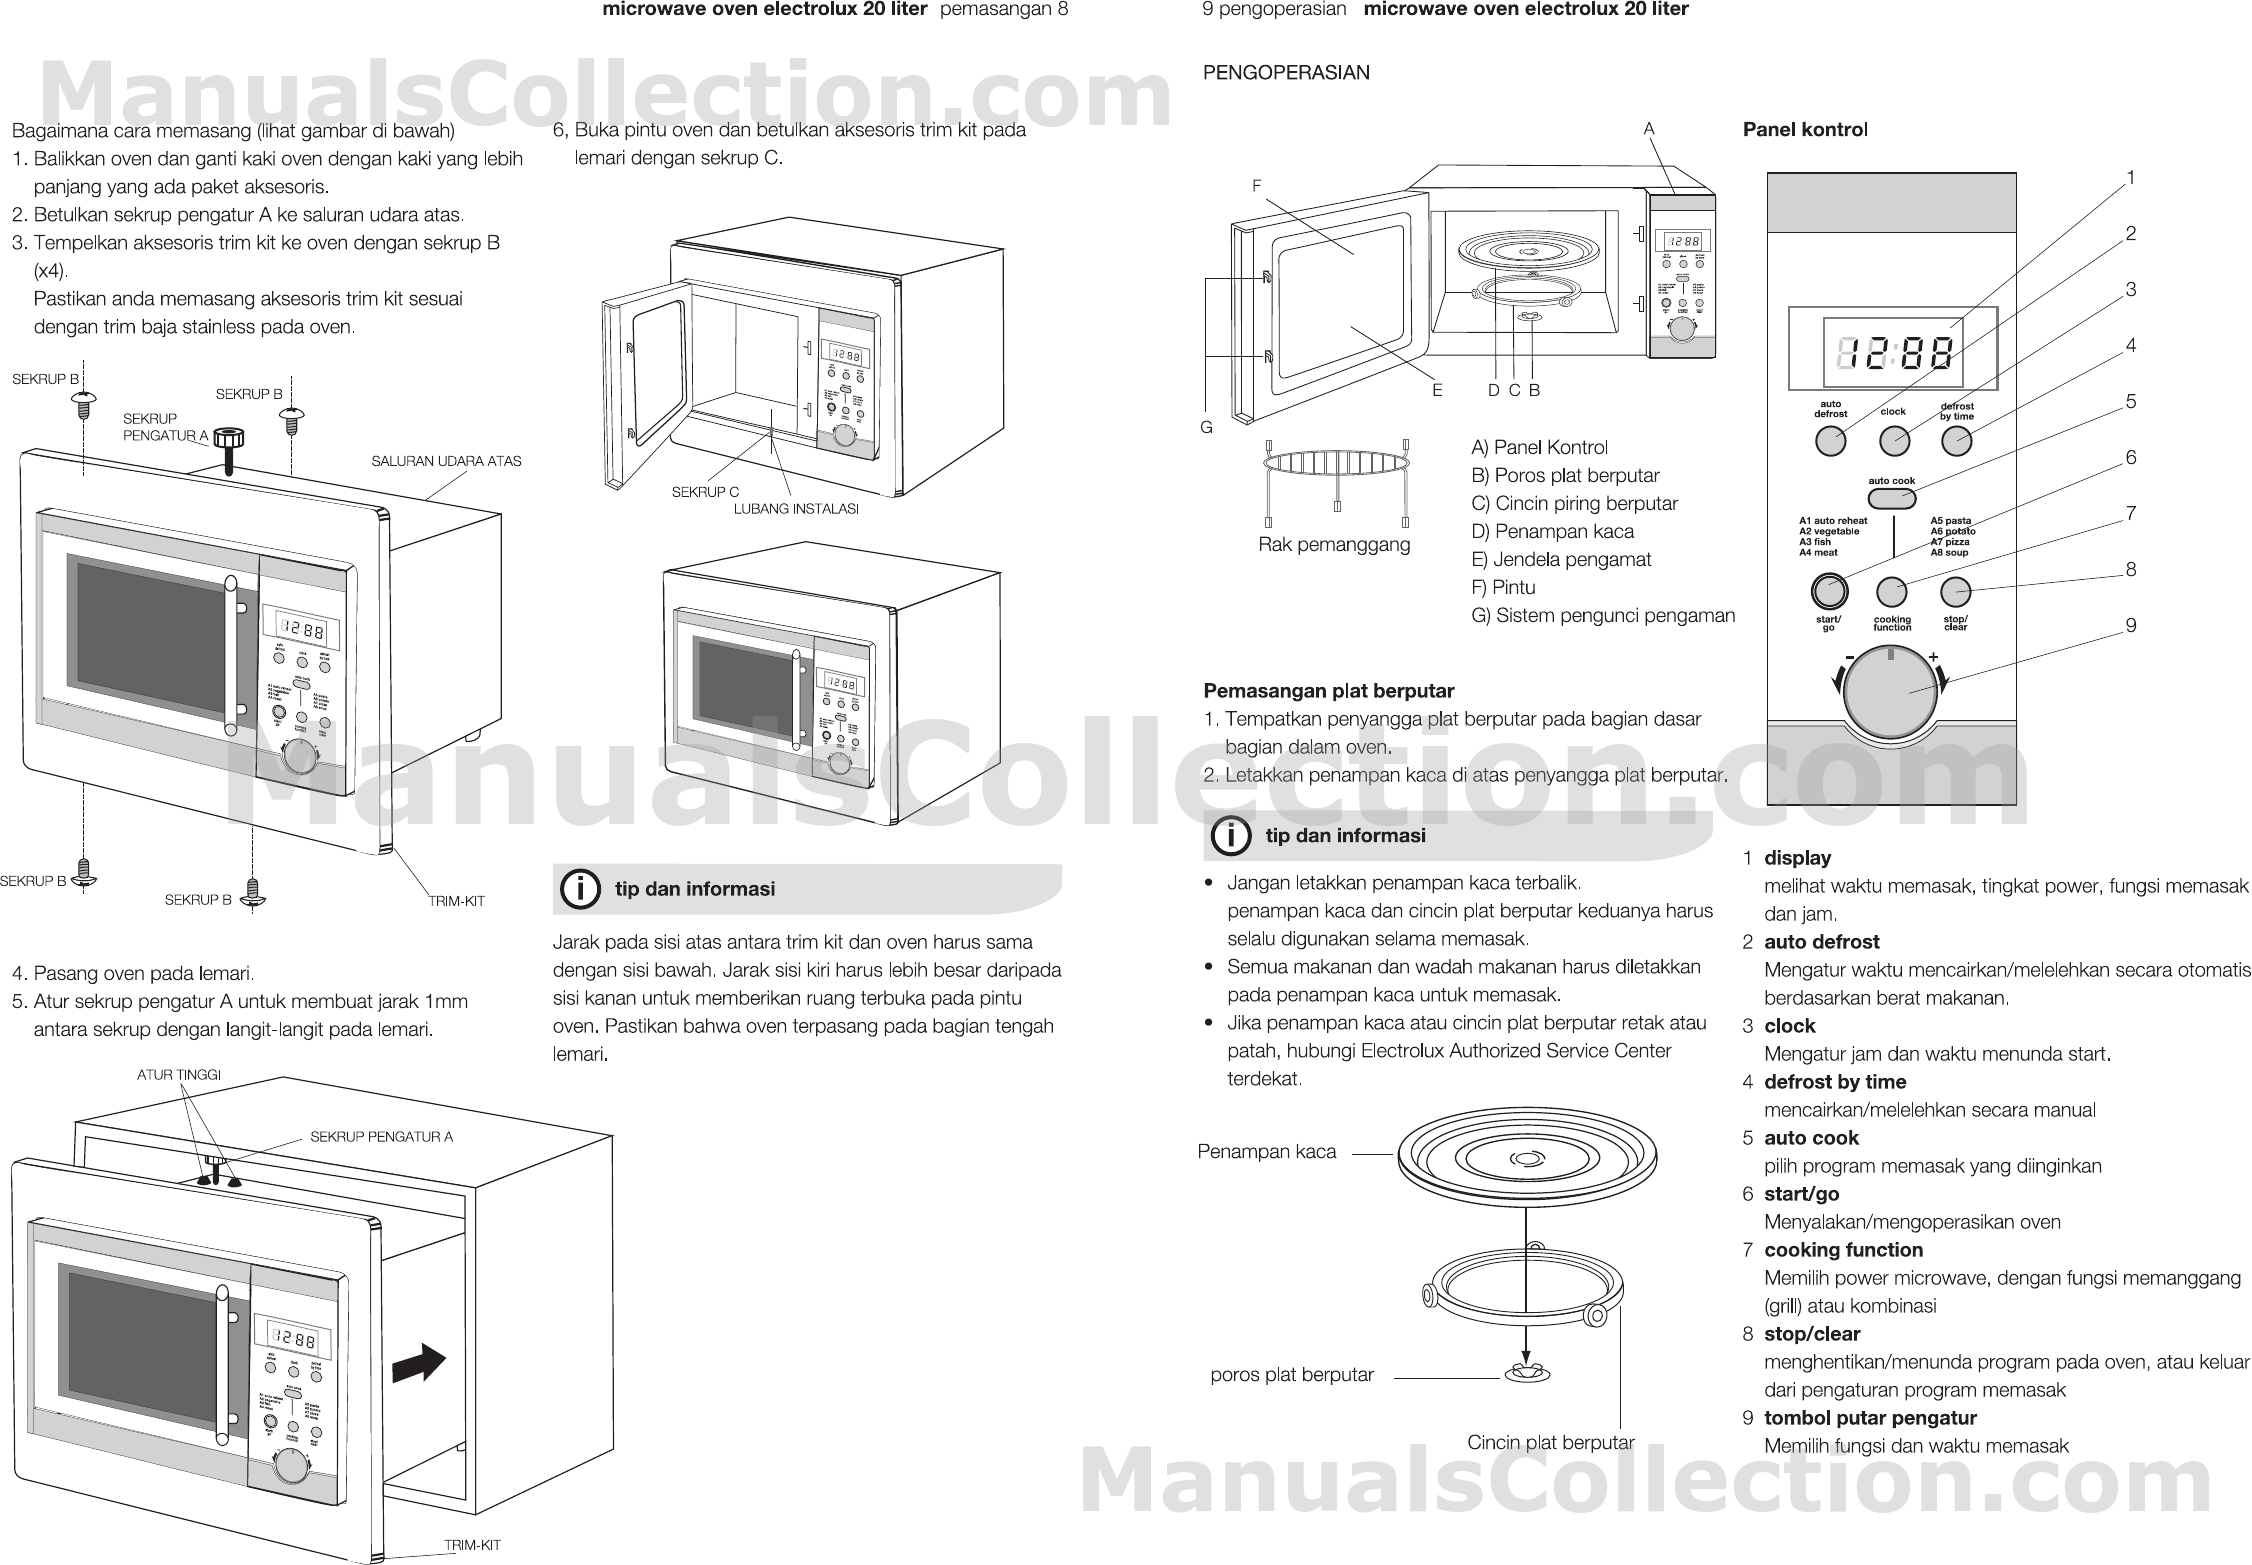 electrolux microwave model cpbm189kfc user manual